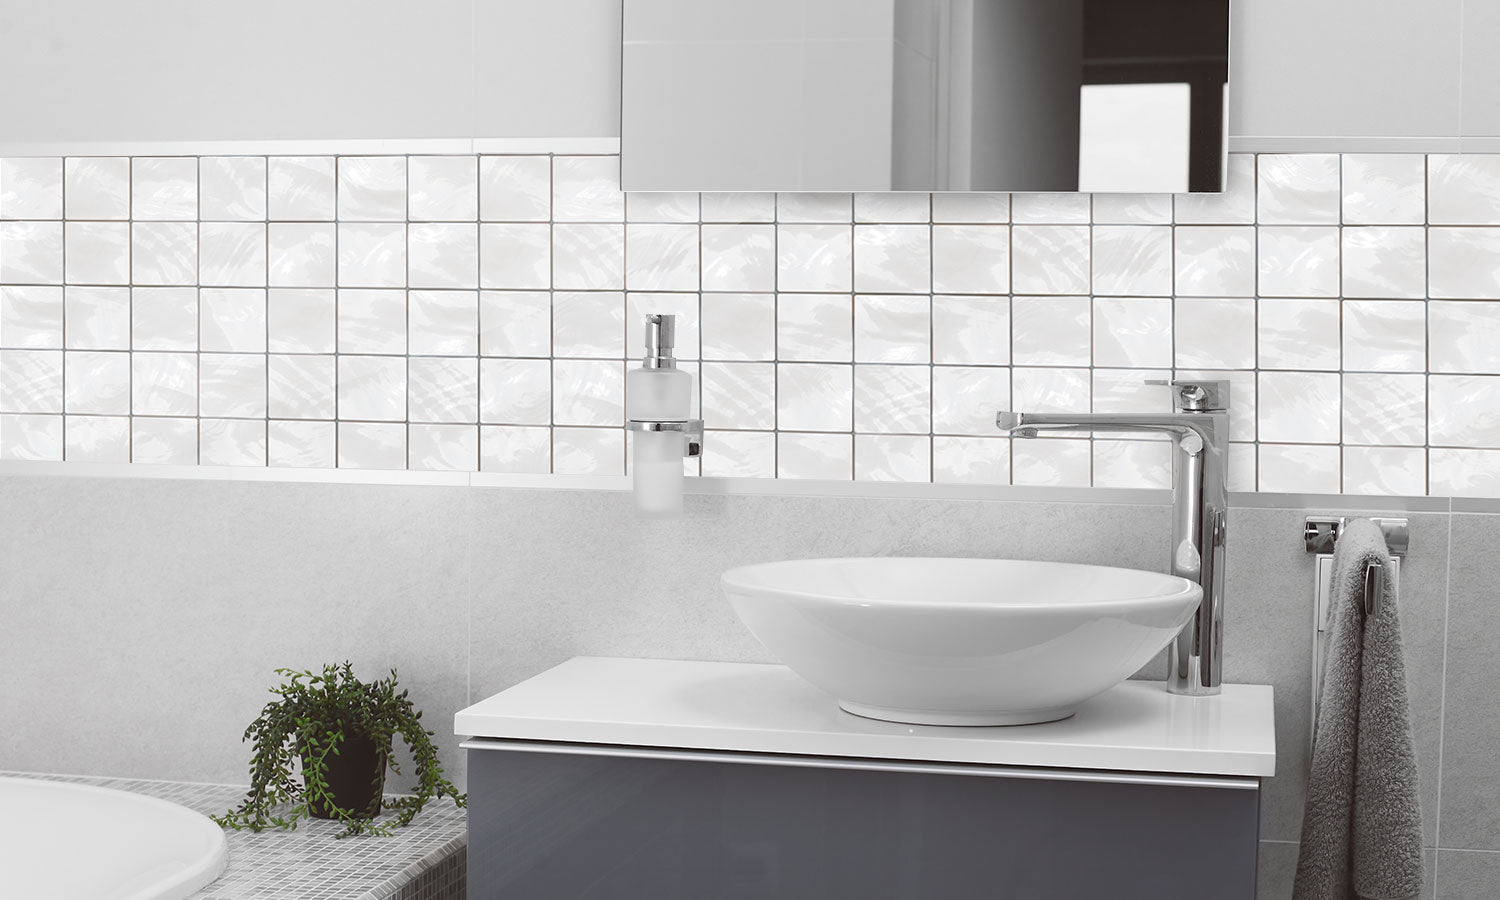 Paneli za kuhinje Shiny white tiles -  Stakleni / PVC ploče / Pleksiglas -  sa printom za kuhinju, Zidne obloge PKU092